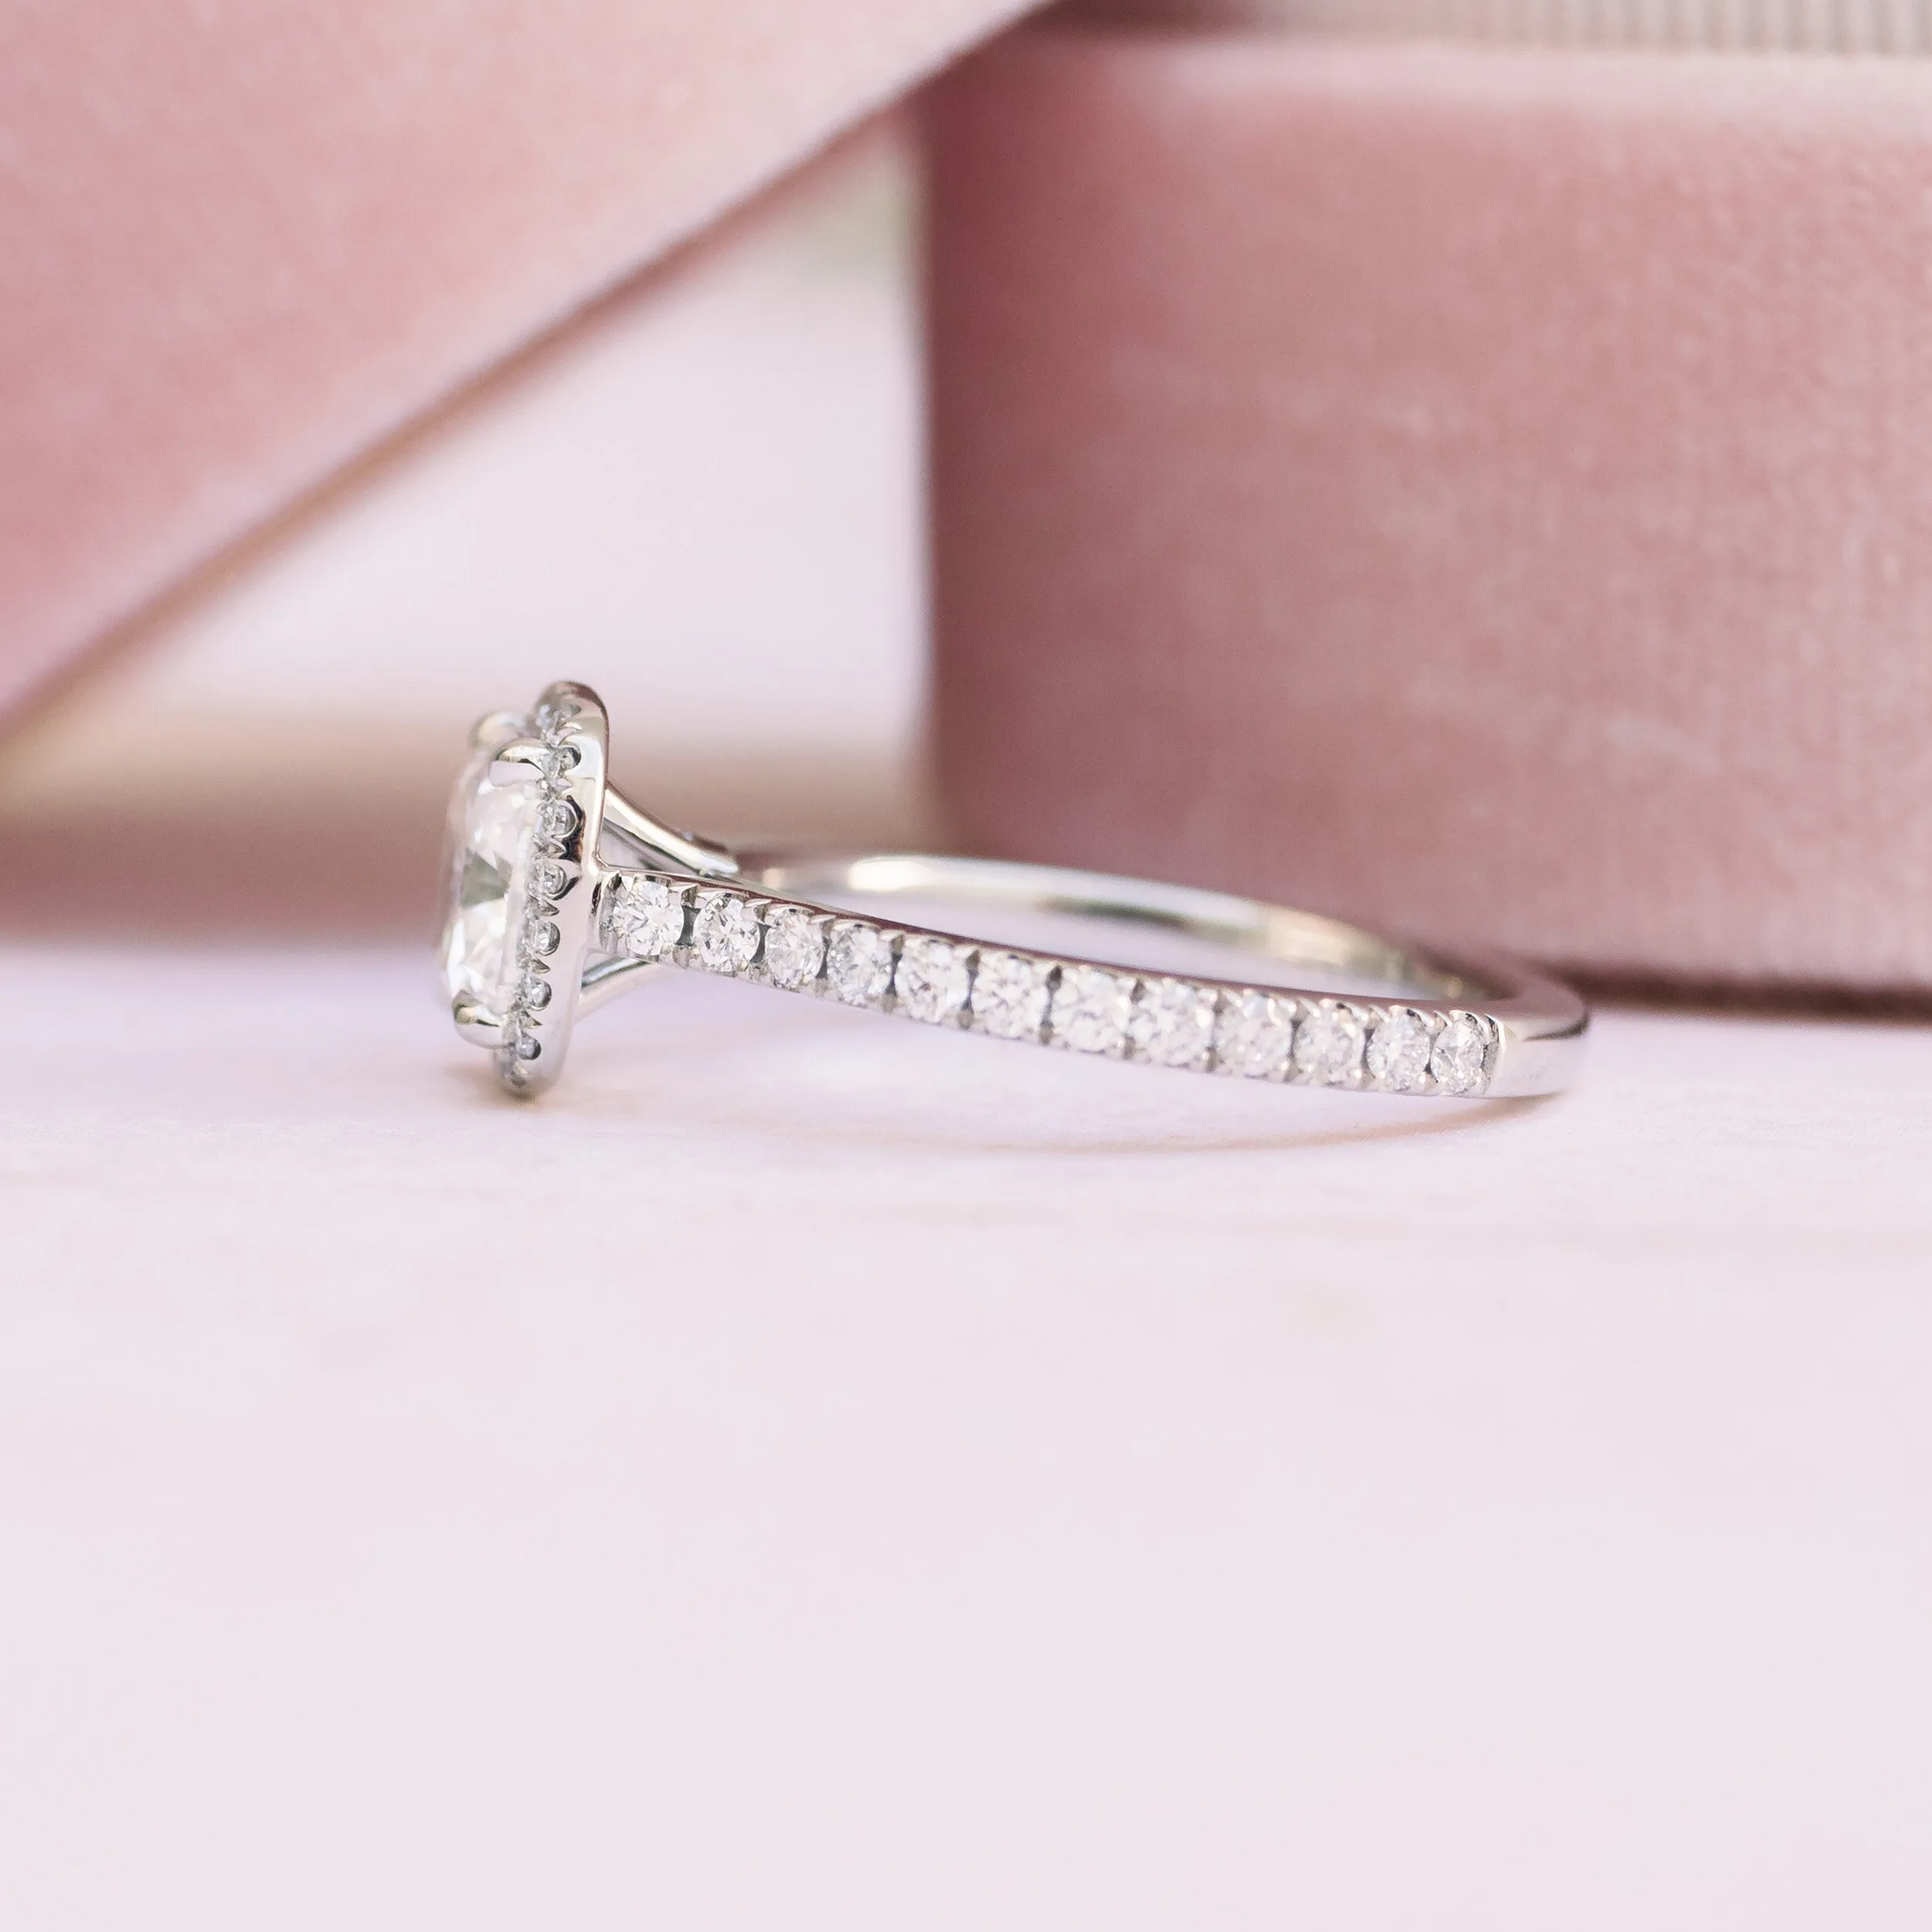 2ct cushion cut lab diamond halo engagement ring setting platinum ada diamonds design ad-364 profile view